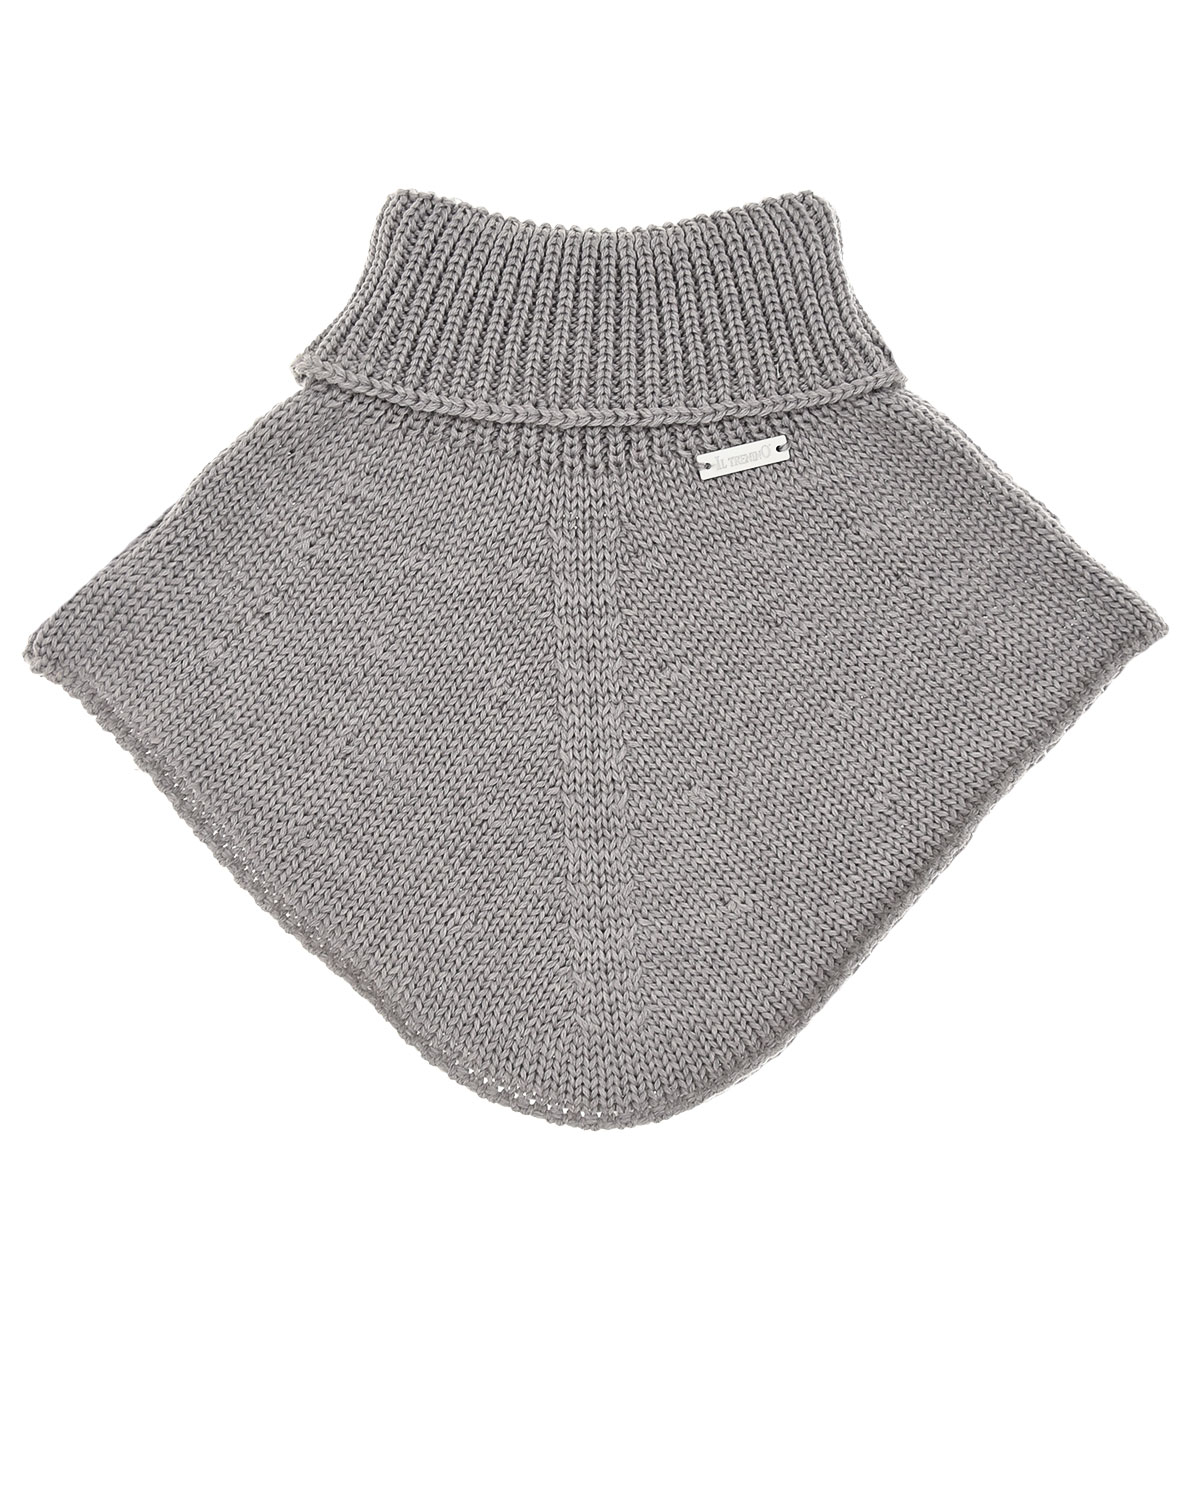 Серый базовый шарф-горло Il Trenino детский, размер unica